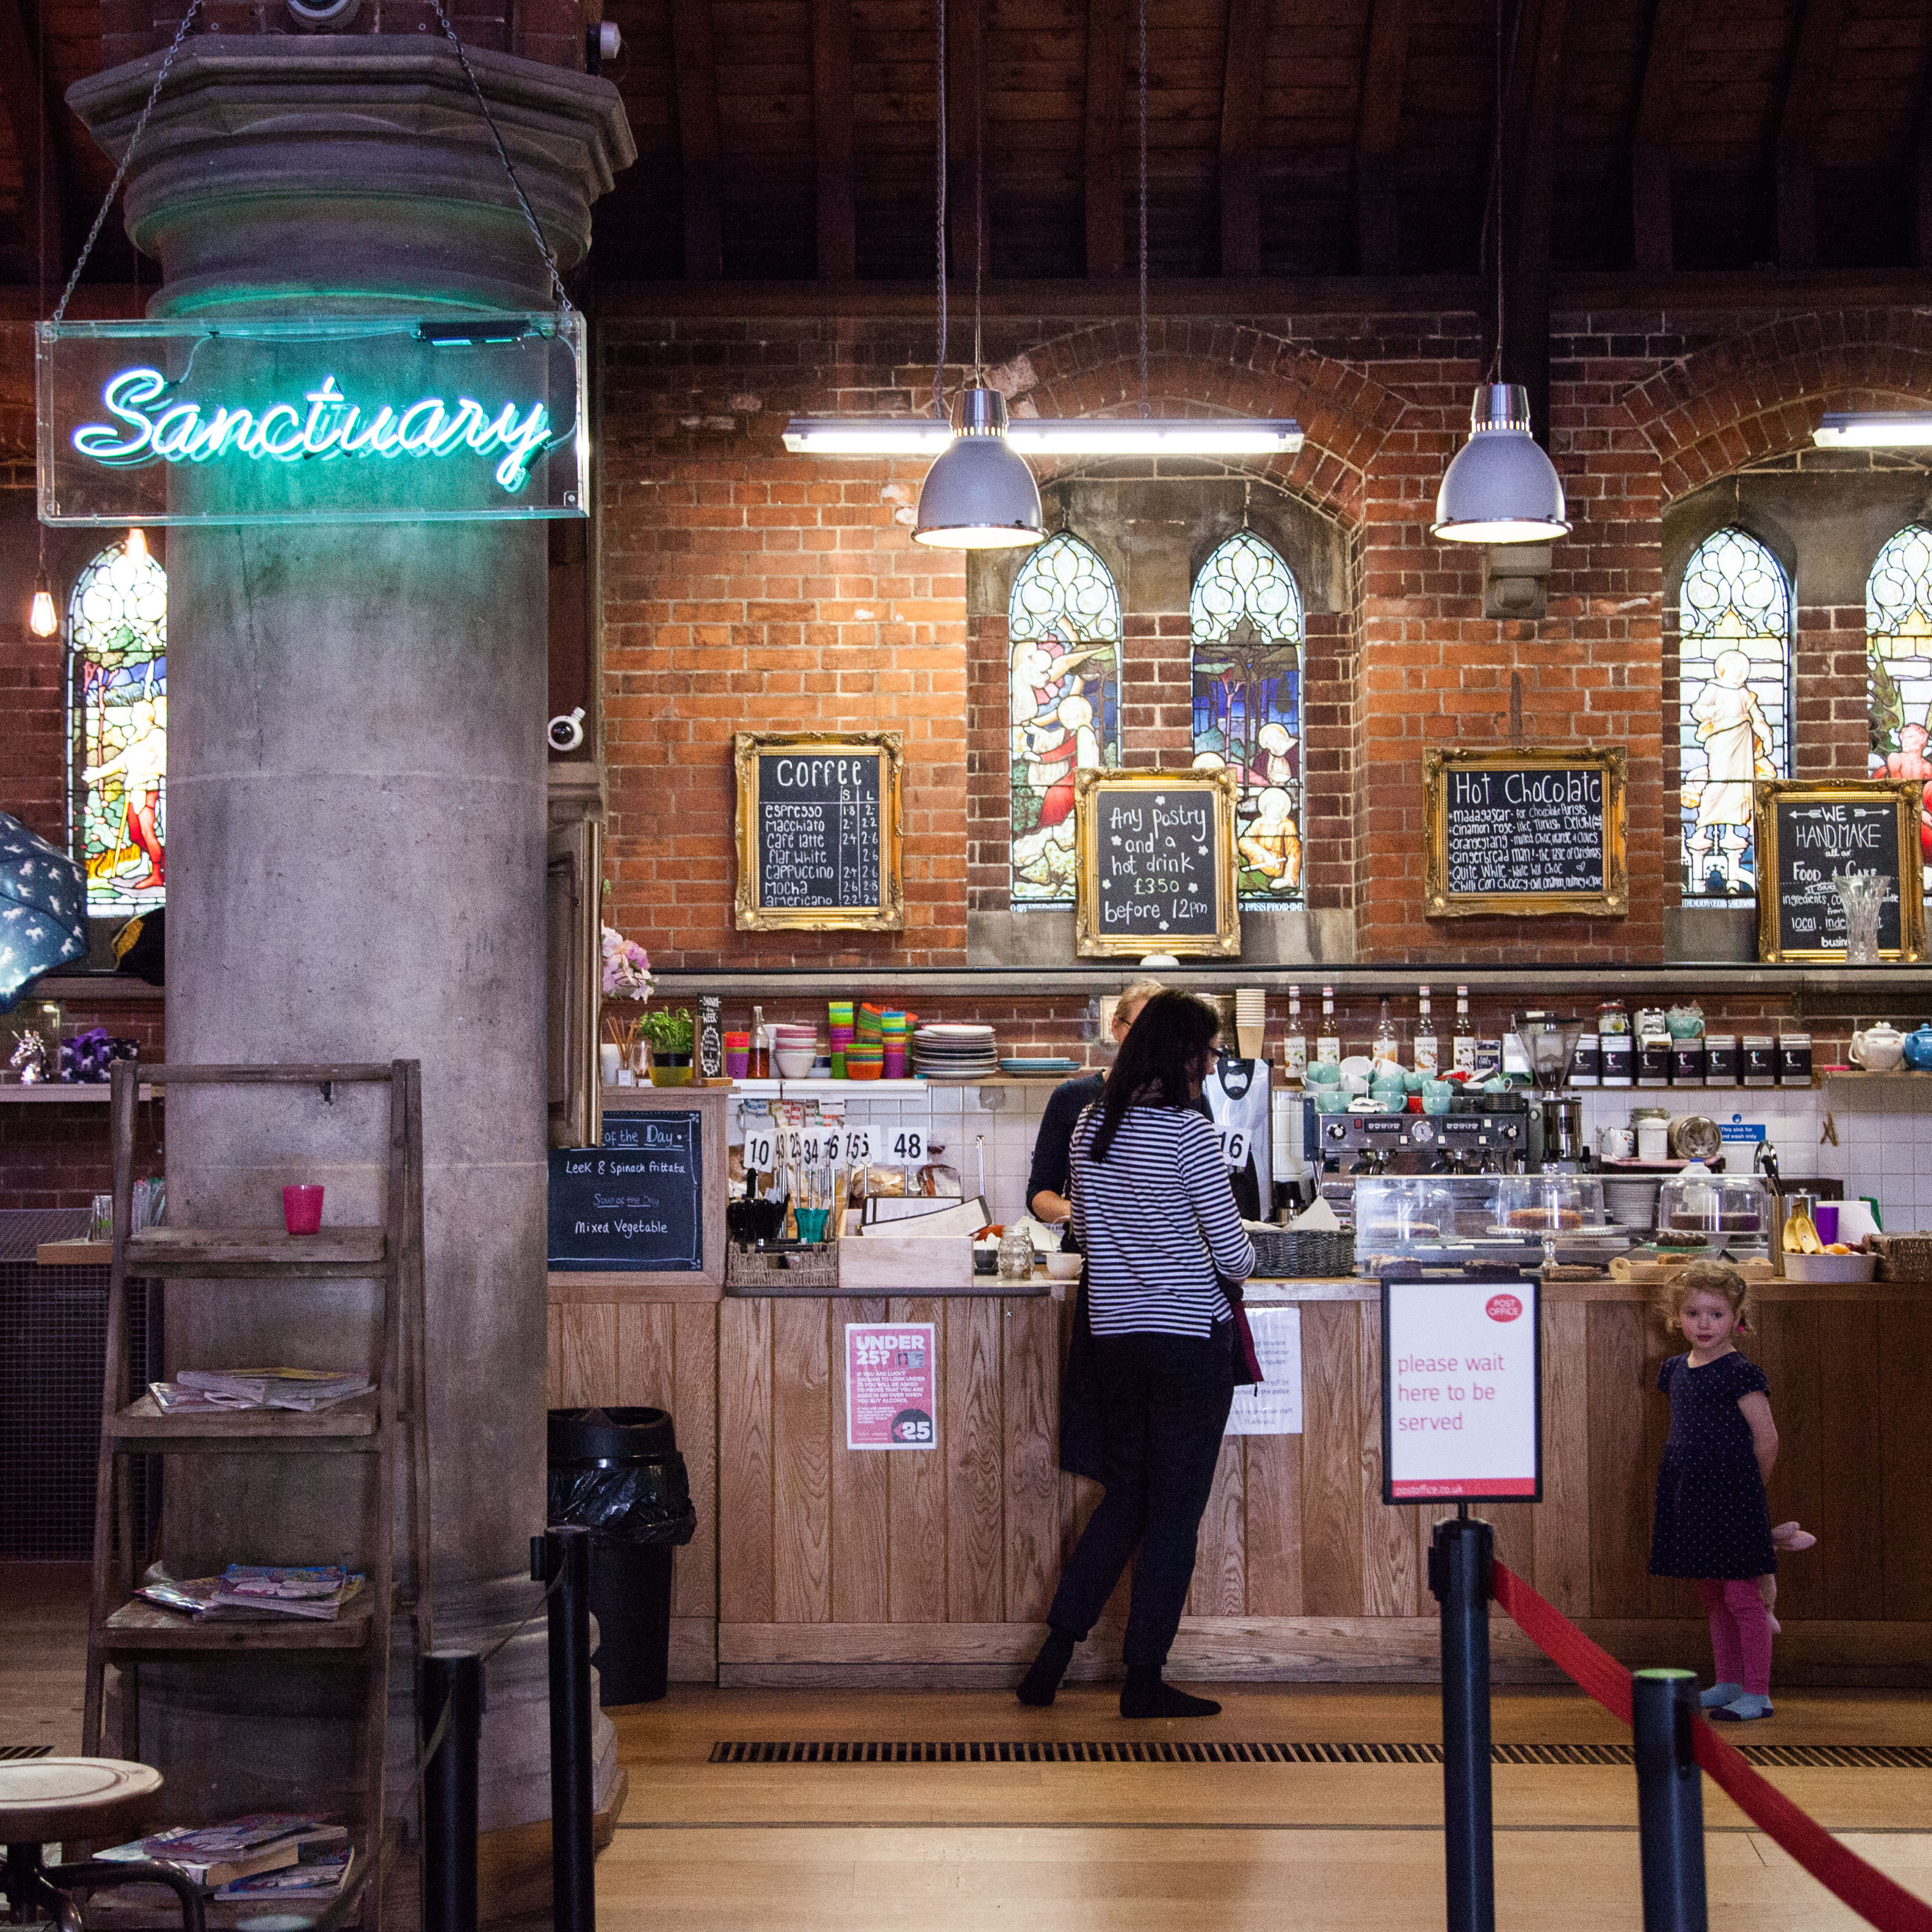 The Sanctuary Cafe